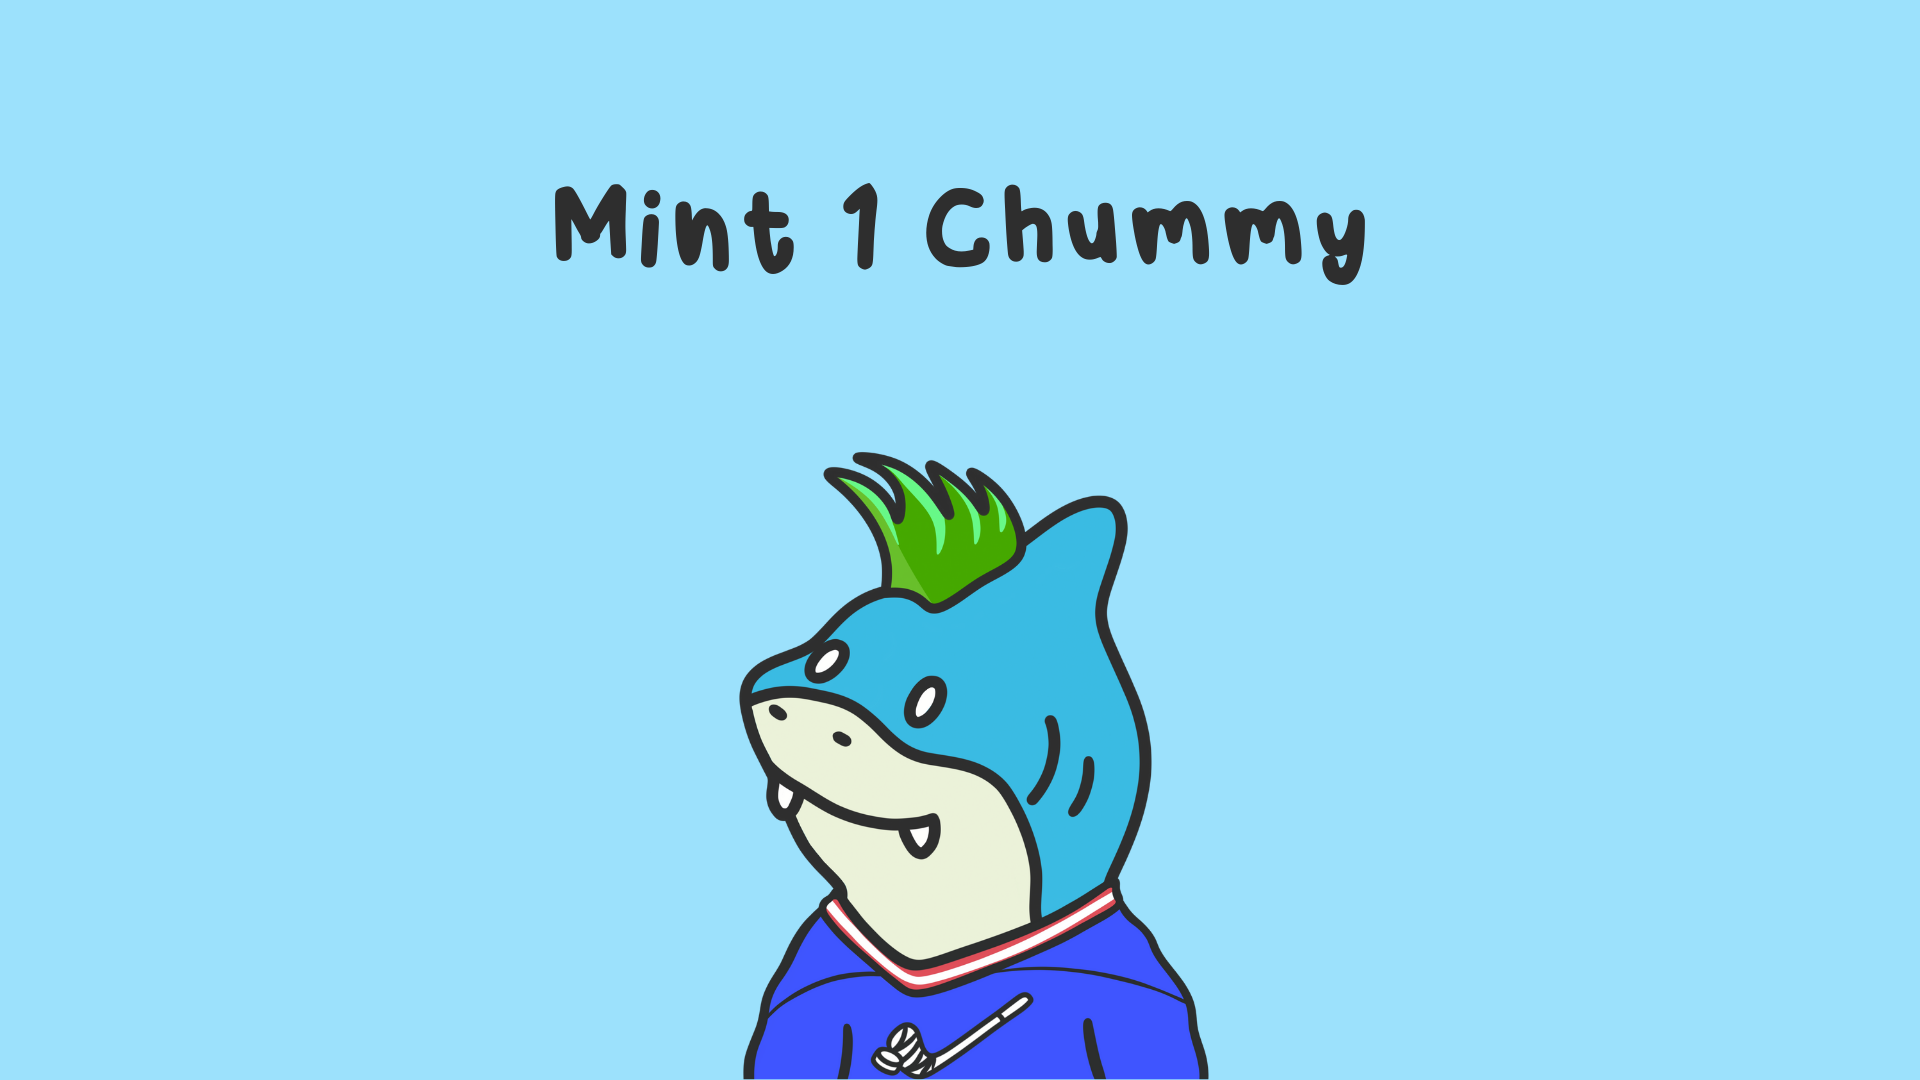 mint 1 chummy